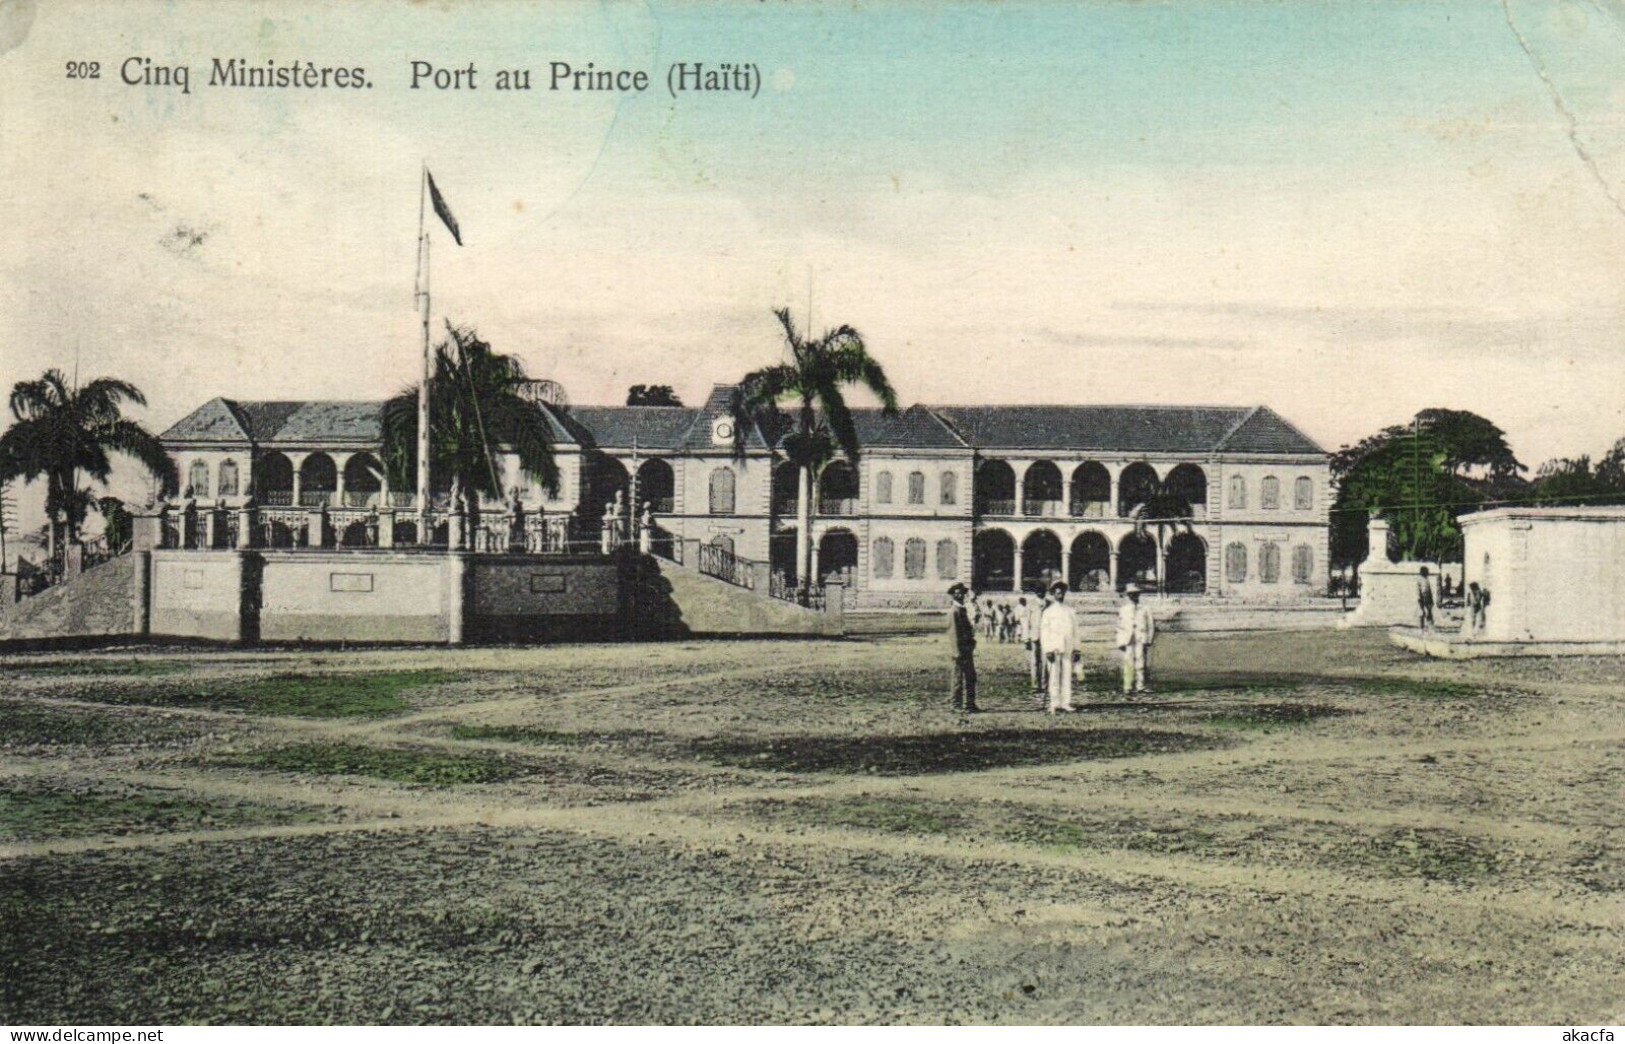 PC HAITI CARIBBEAN PORT-au-PRINCE CINQ MINISTERES Vintage Postcard (b52074) - Haiti